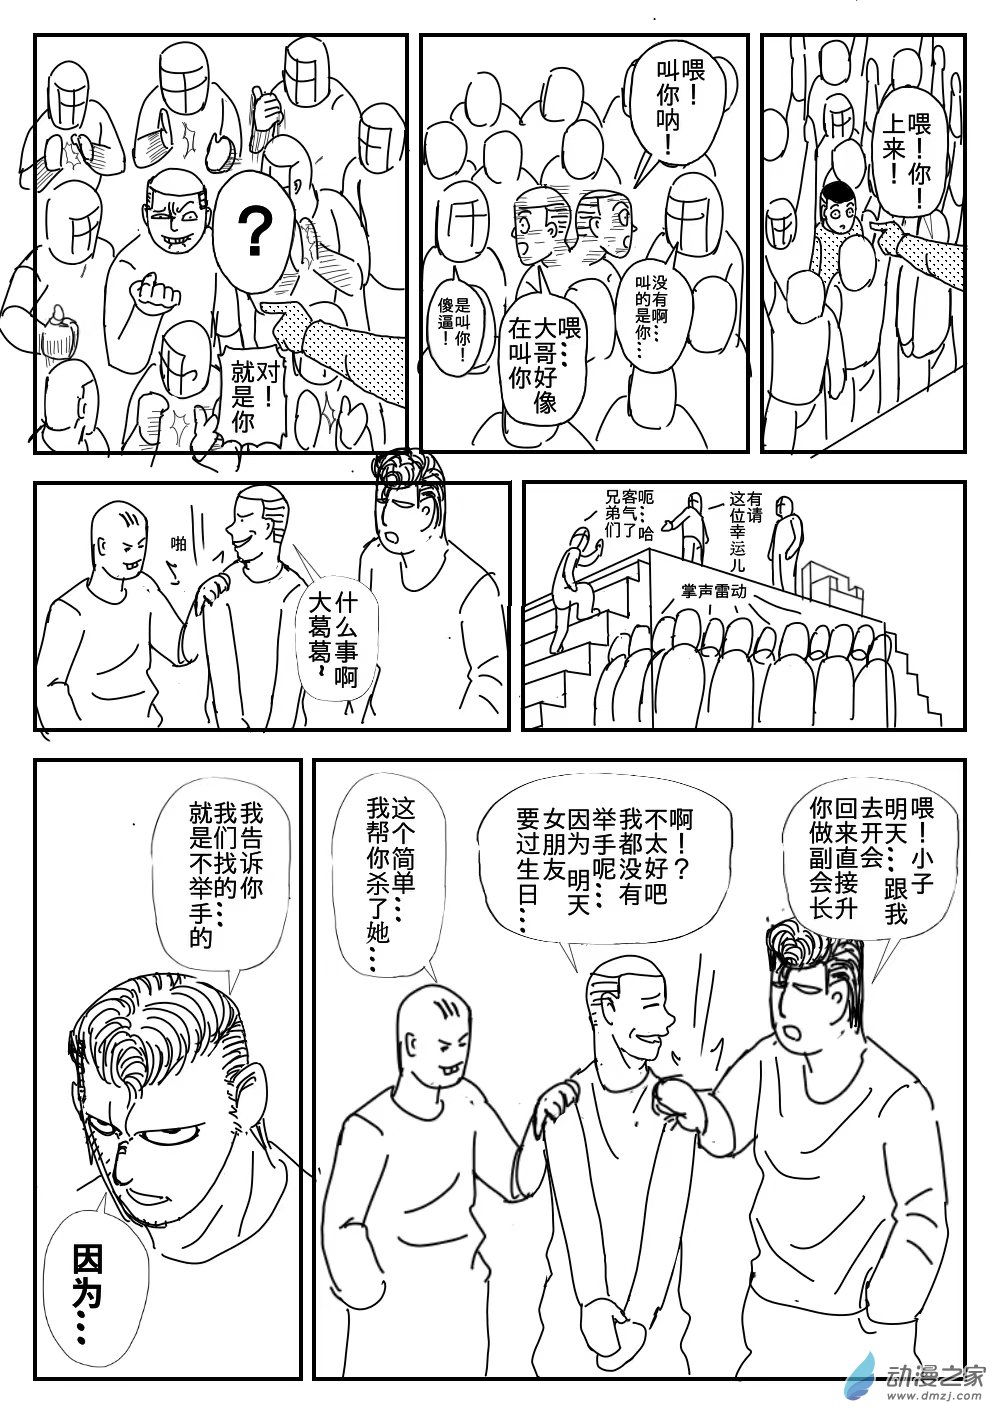 K神的短篇漫畫集 - 01 臥底阿潮 - 4